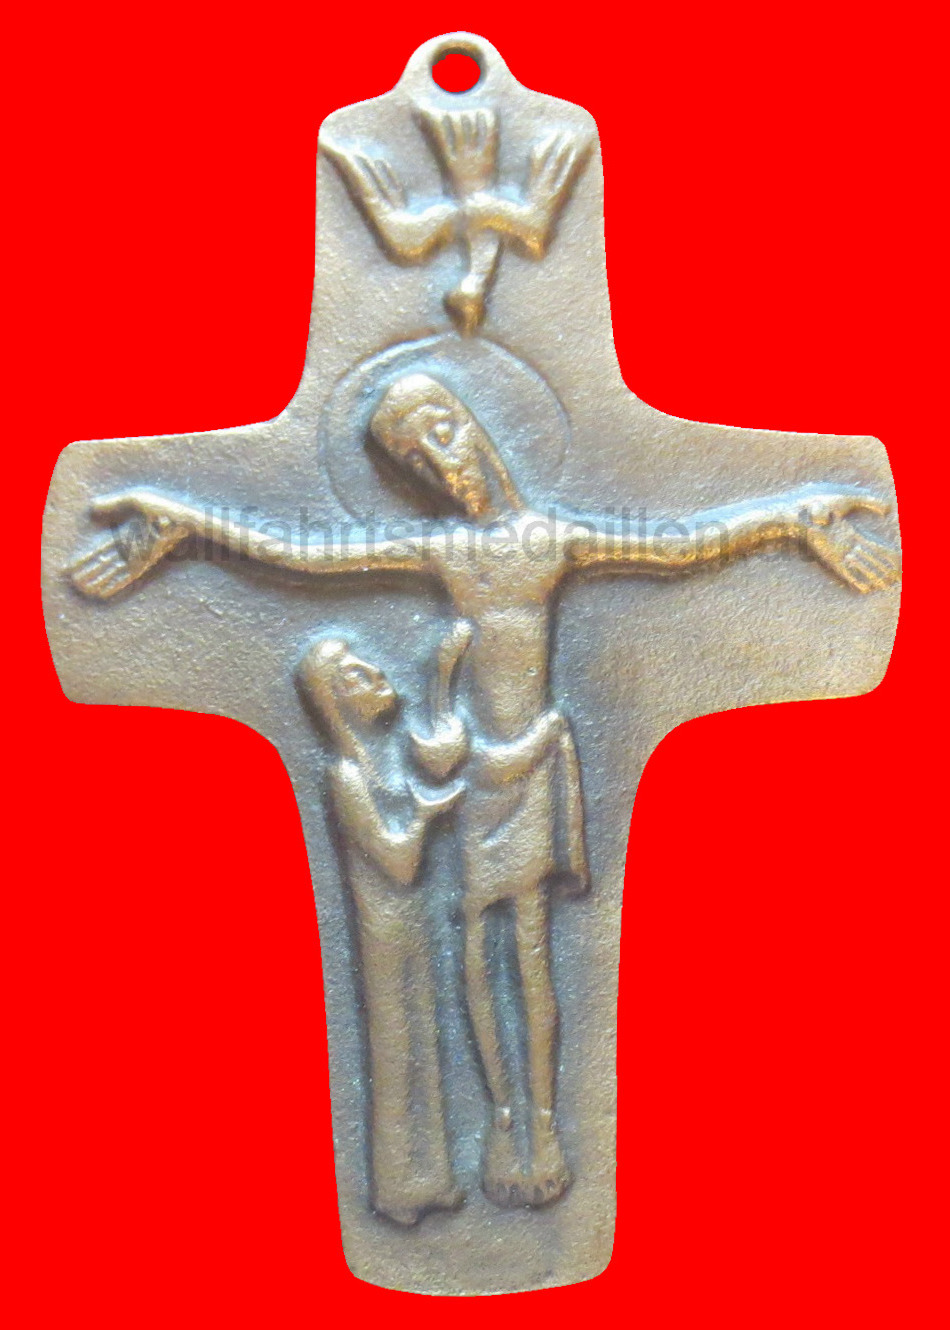 Kommunionskreuz XX Jhd